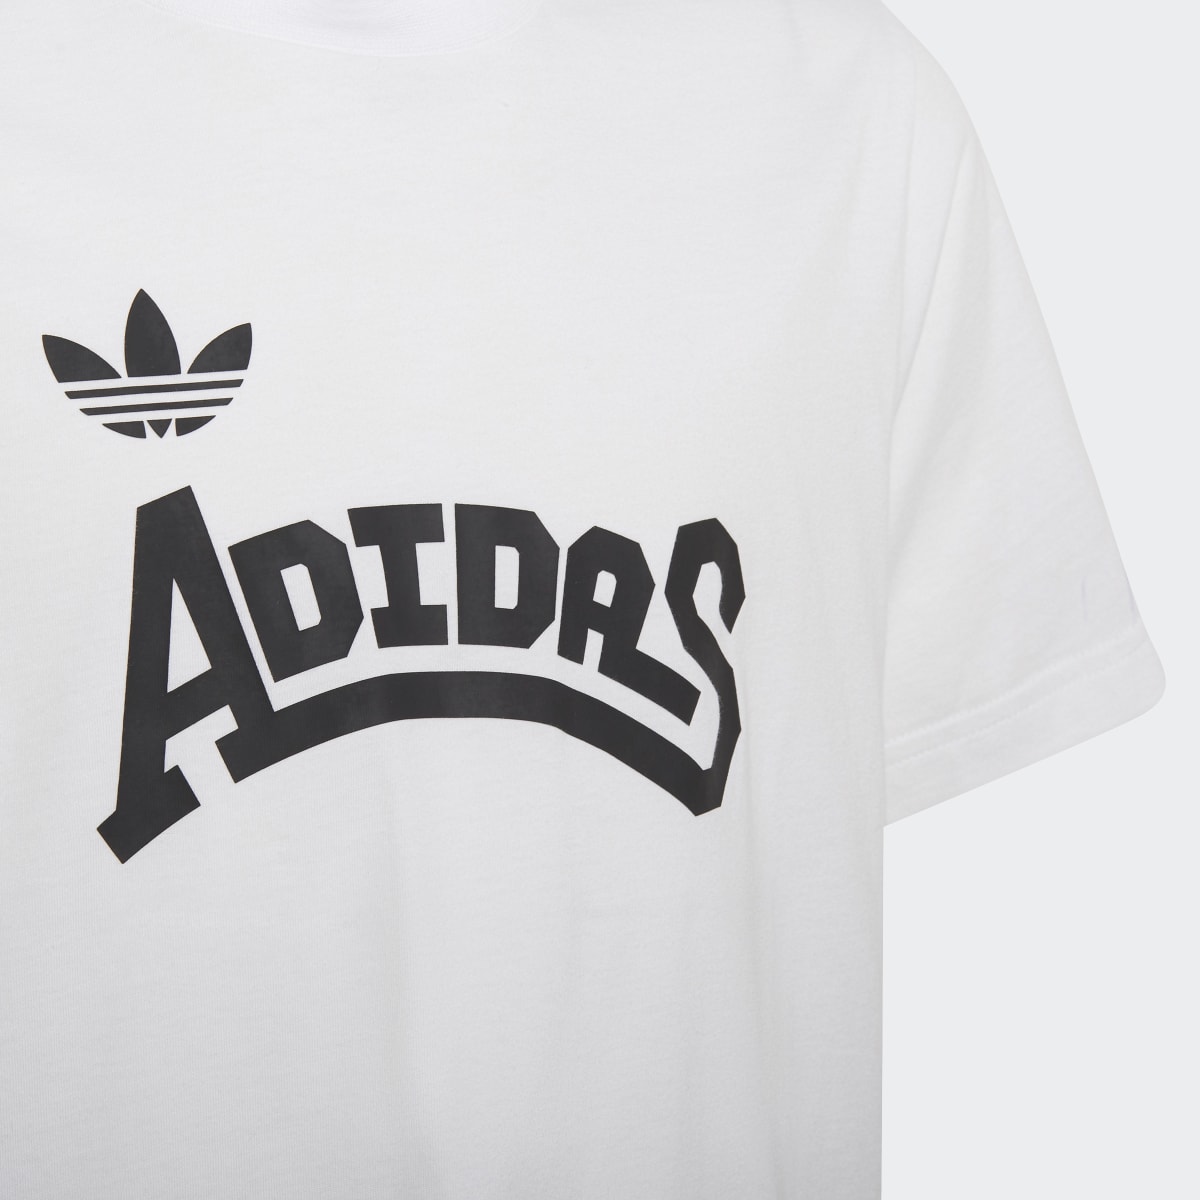 Adidas T-shirt. 4